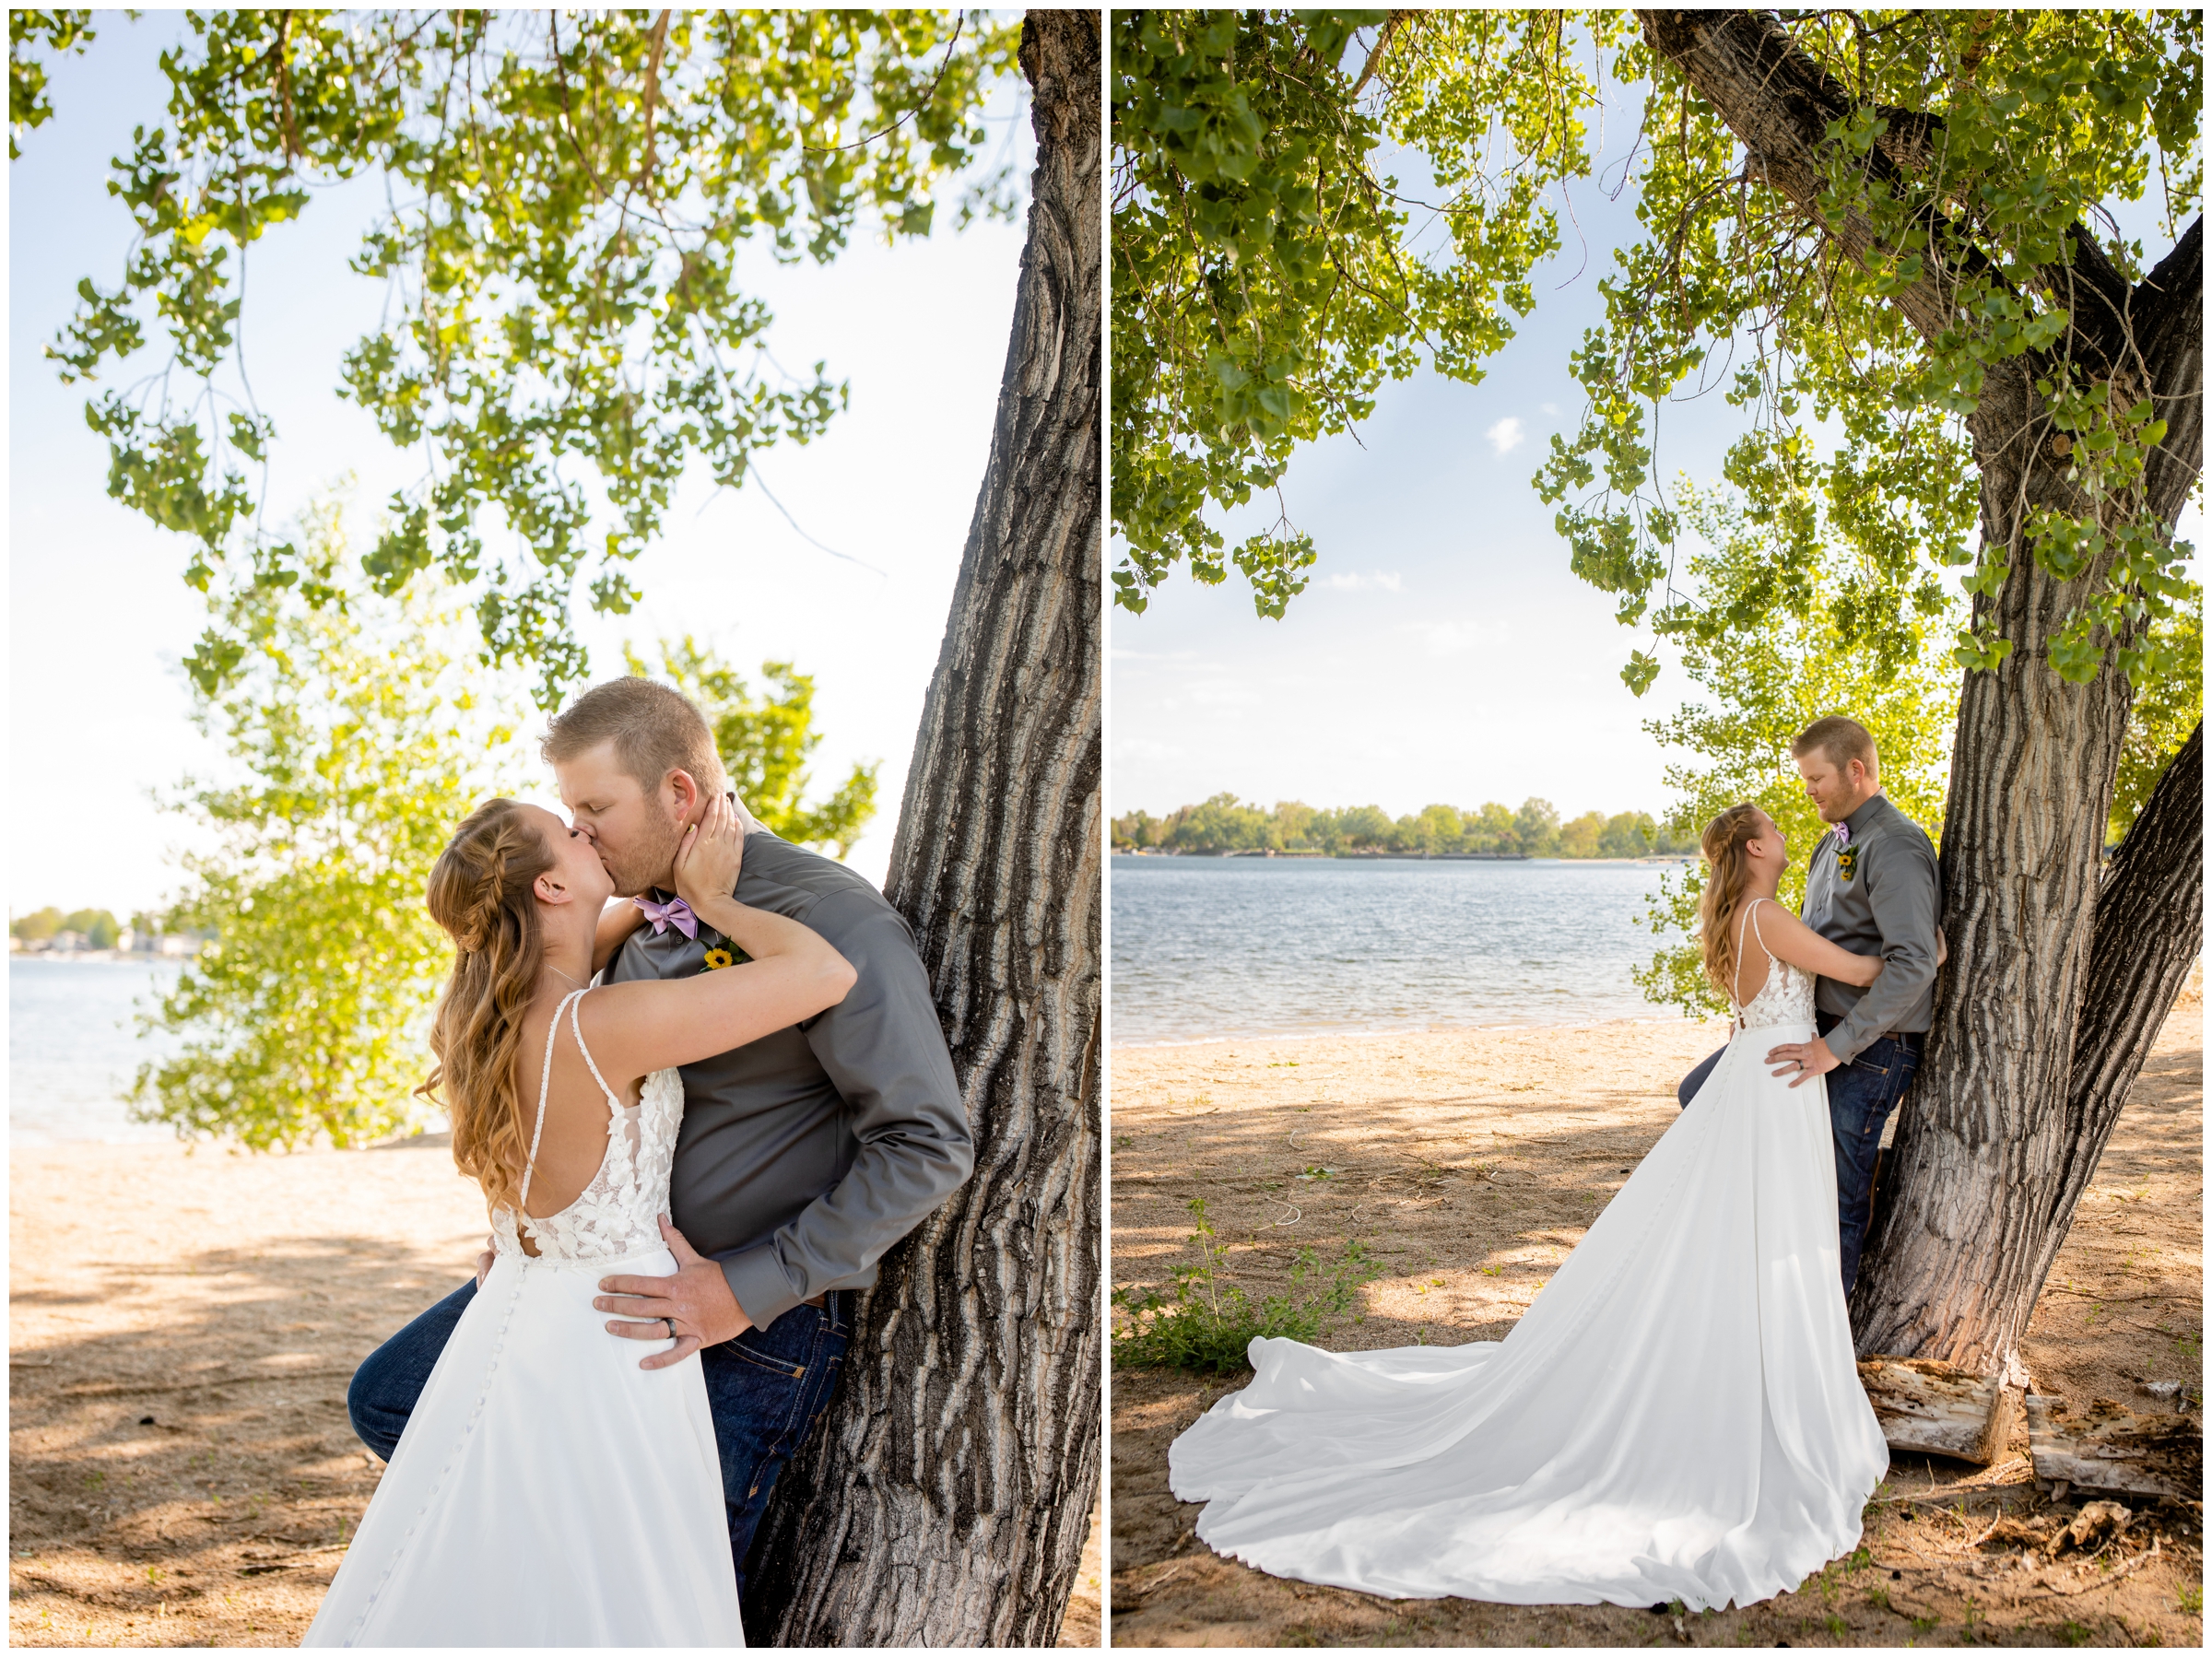 Loveland Colorado wedding photography at Lake Loveland by CO photographer Plum Pretty Photography